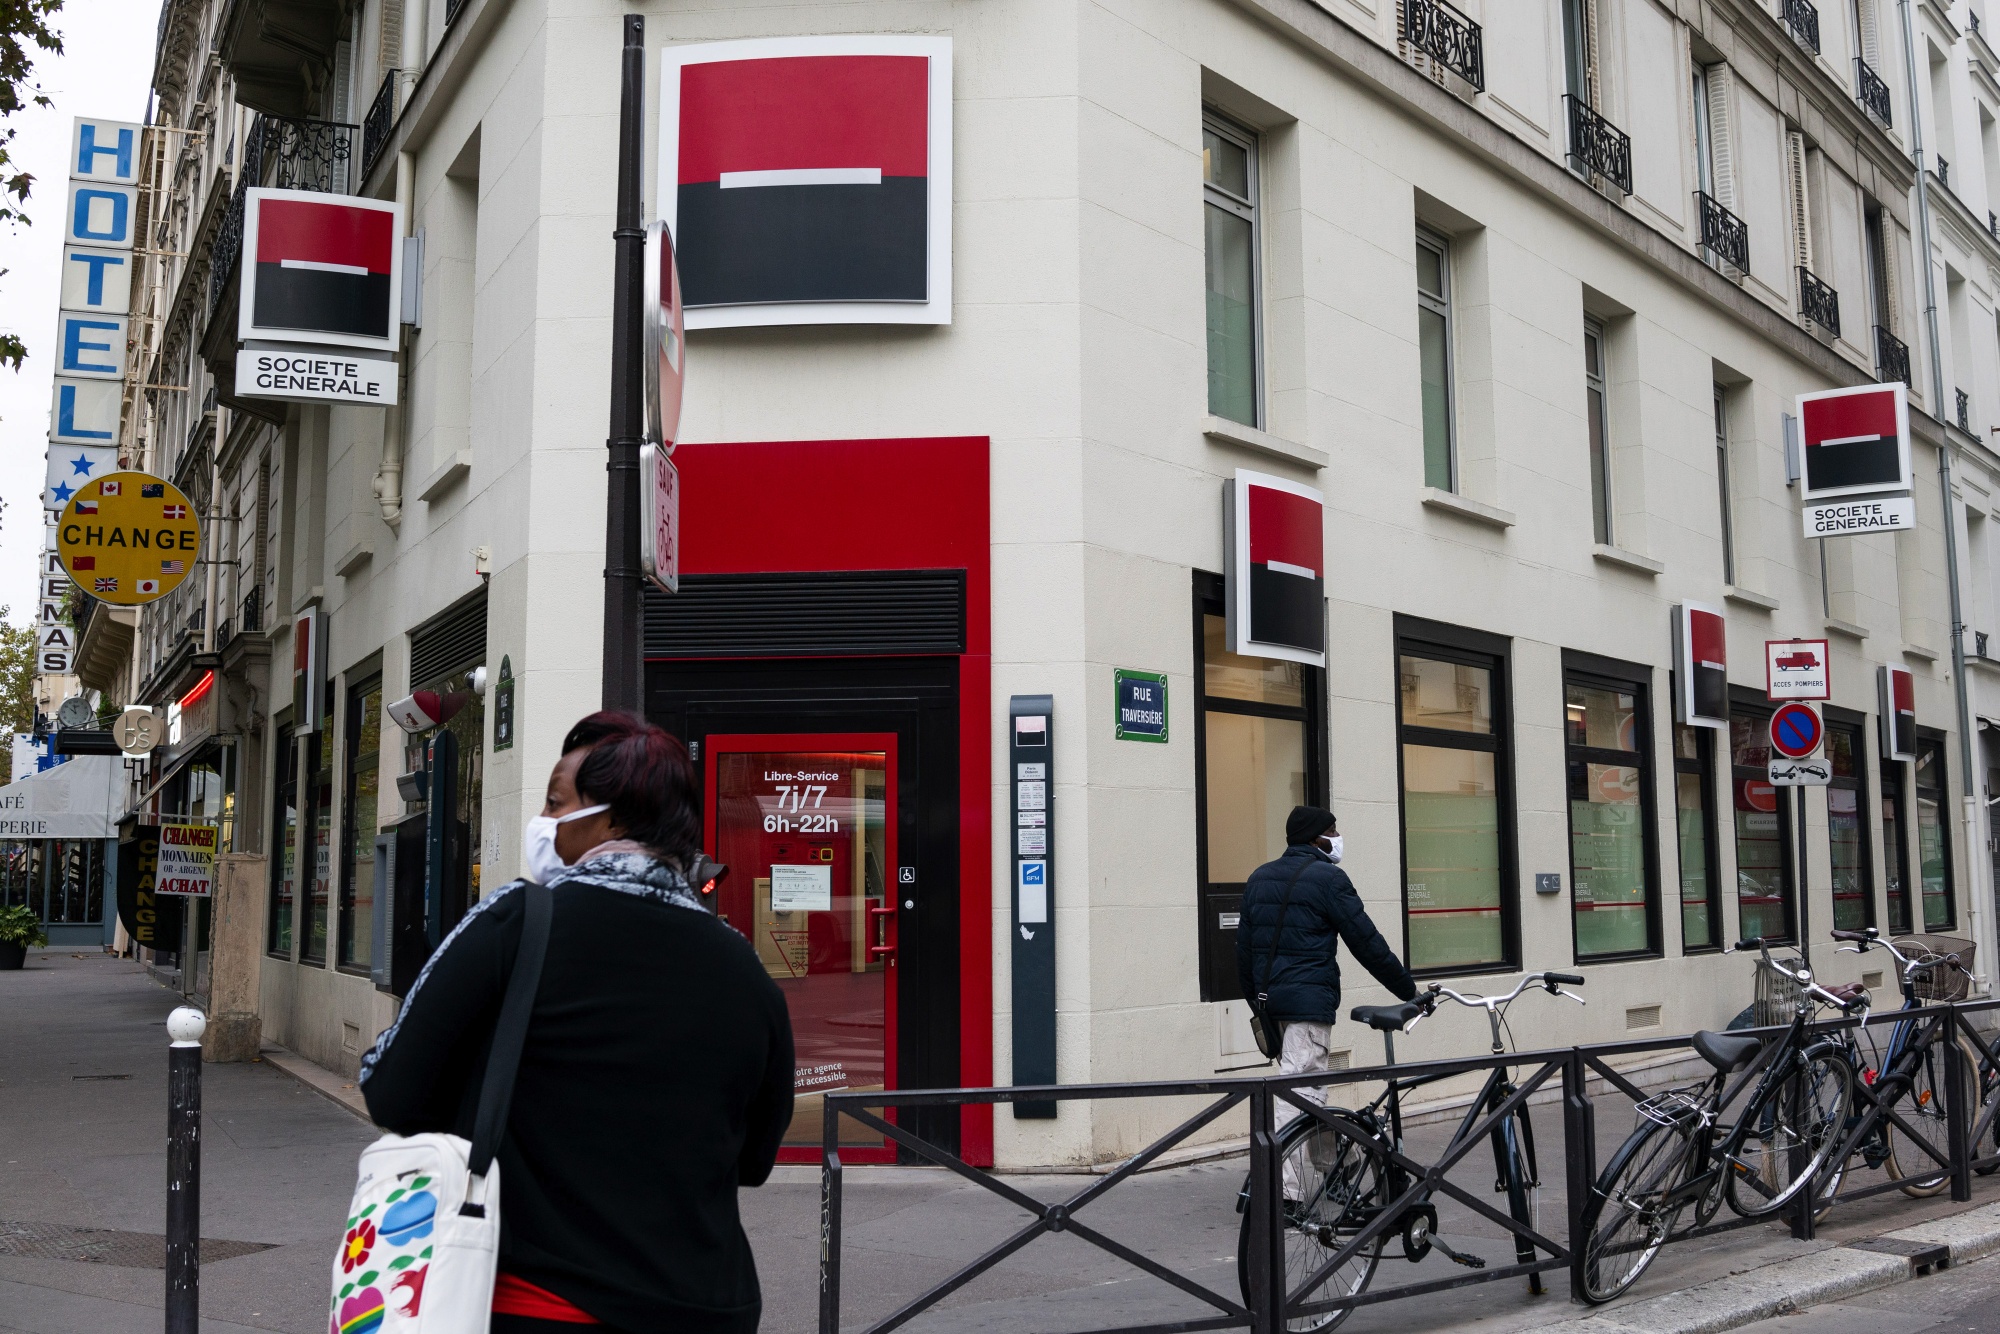 A Societe Generale bank branch in Paris.